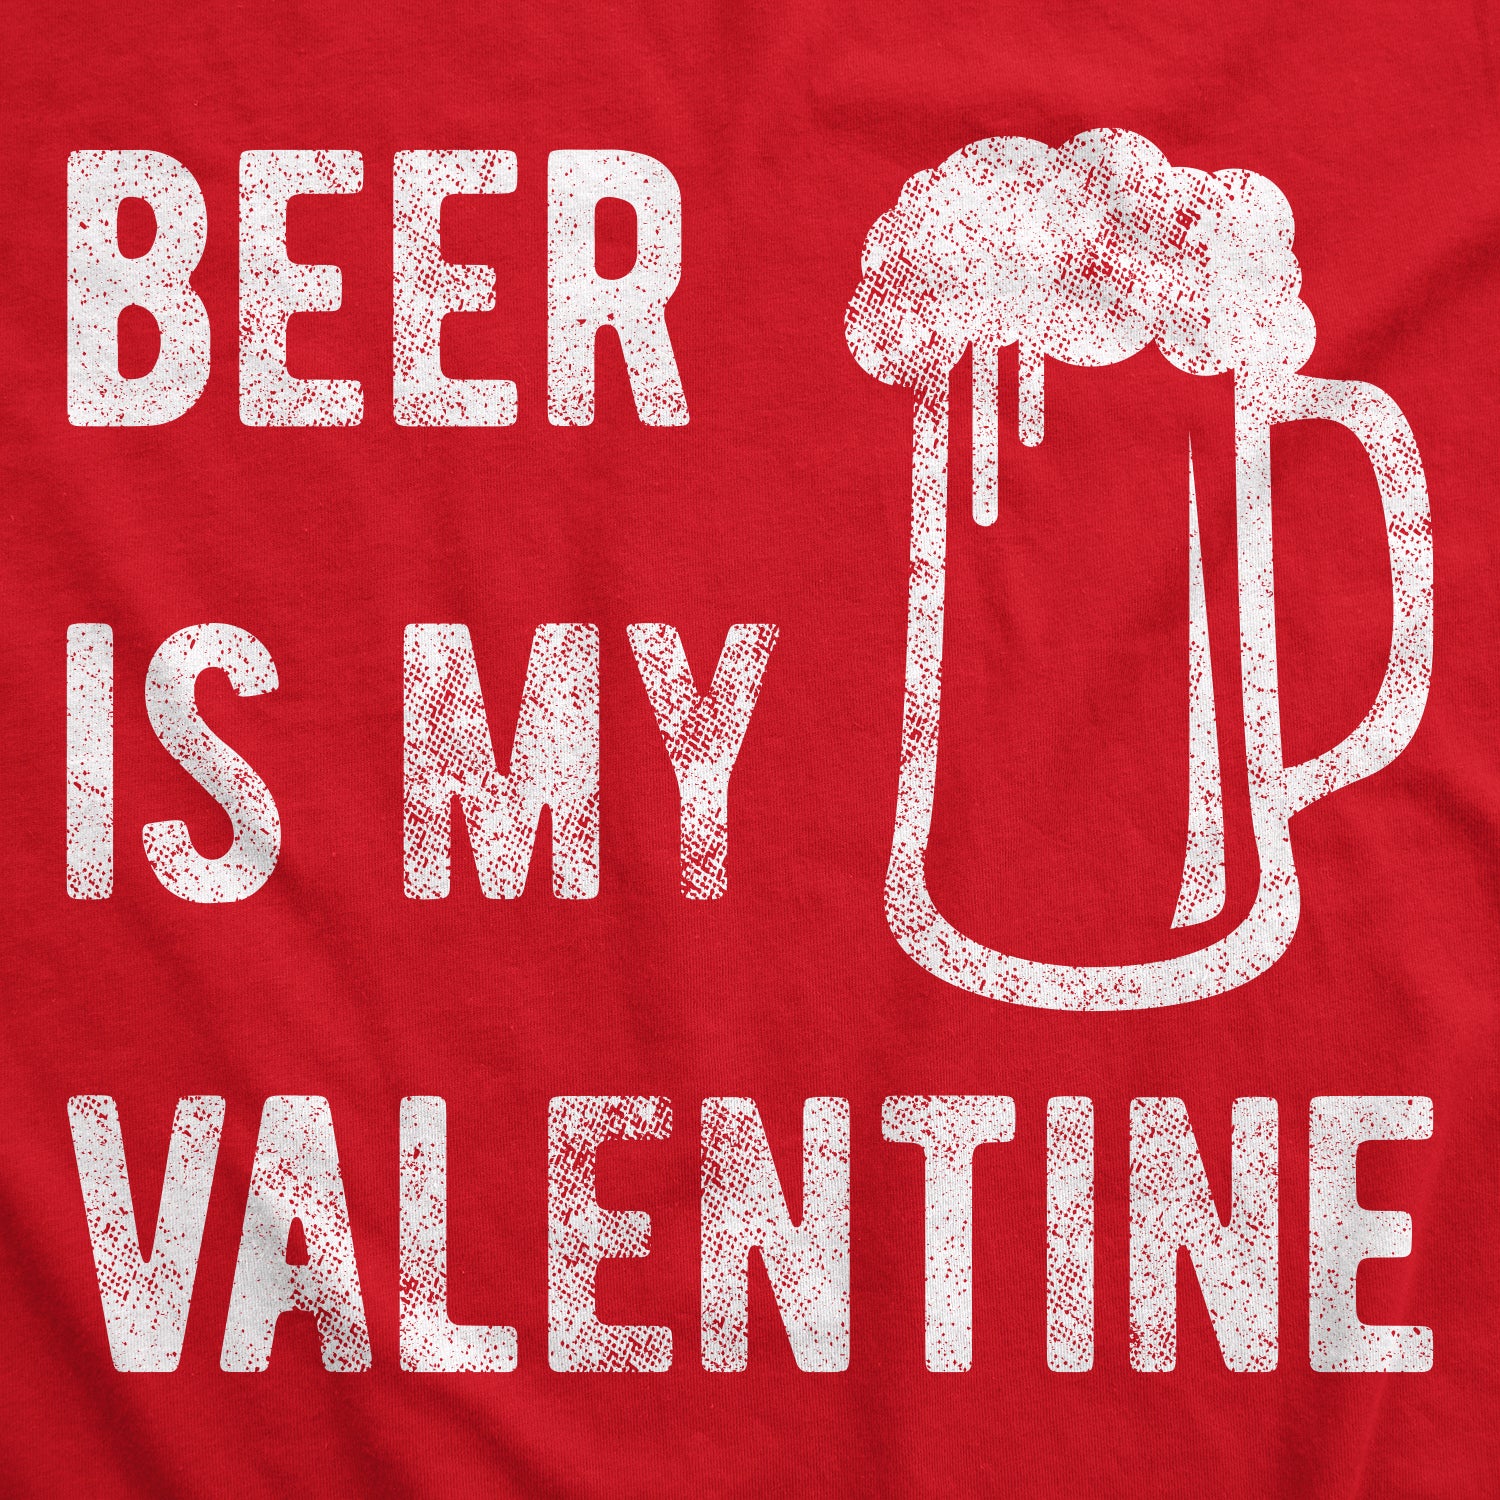 Funny Heather Red - Beer Valentine Beer Is My Valentine Mens T Shirt Nerdy Valentine's Day Beer Tee